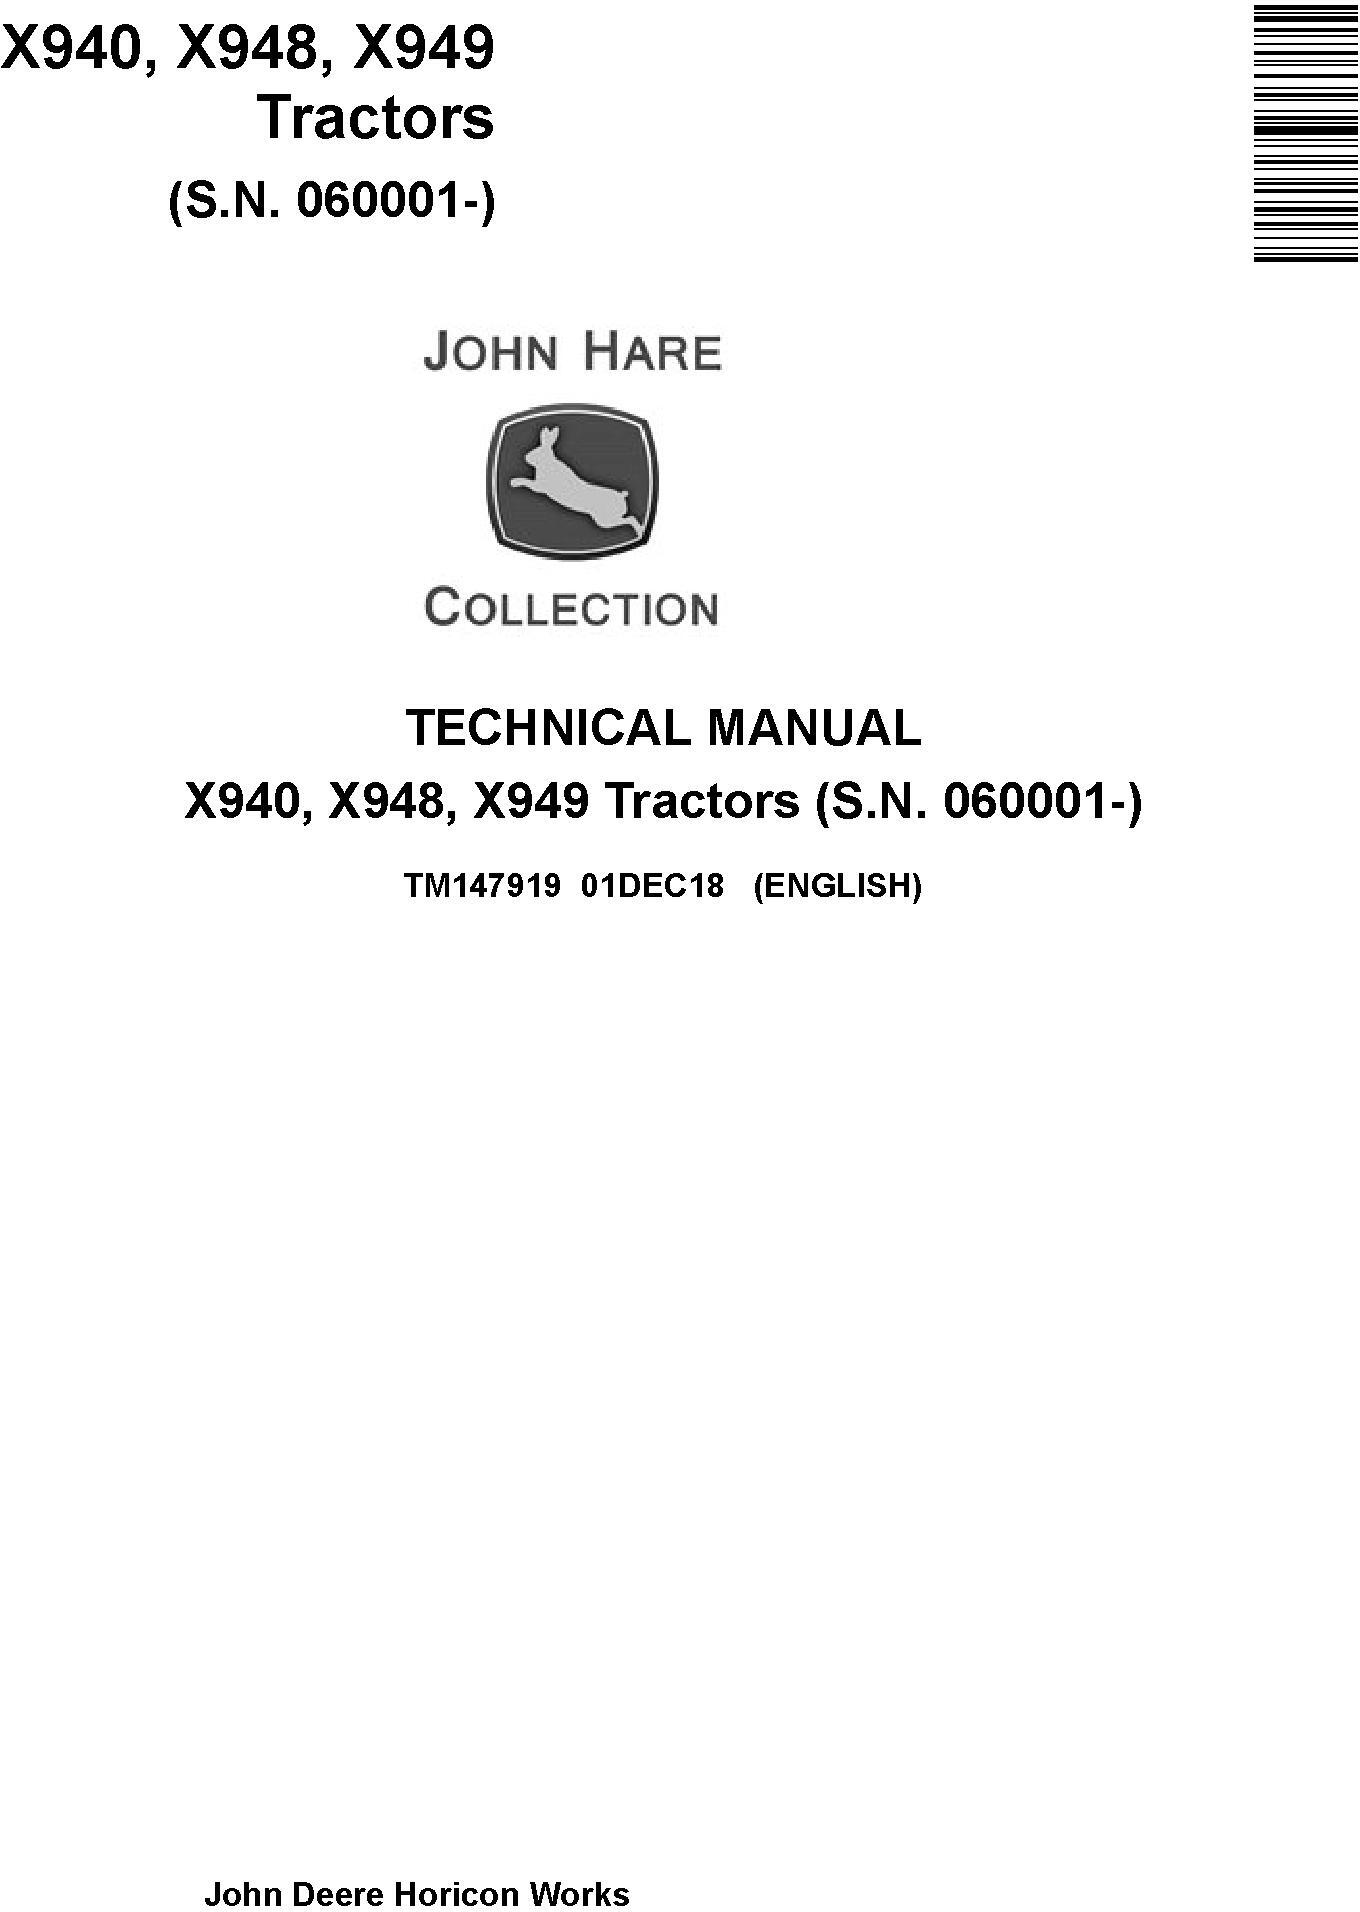 John Deere X940, X948, X949 Compact Utility Tractors (SN. 060001-) Technical Manual (TM147919) - 19107